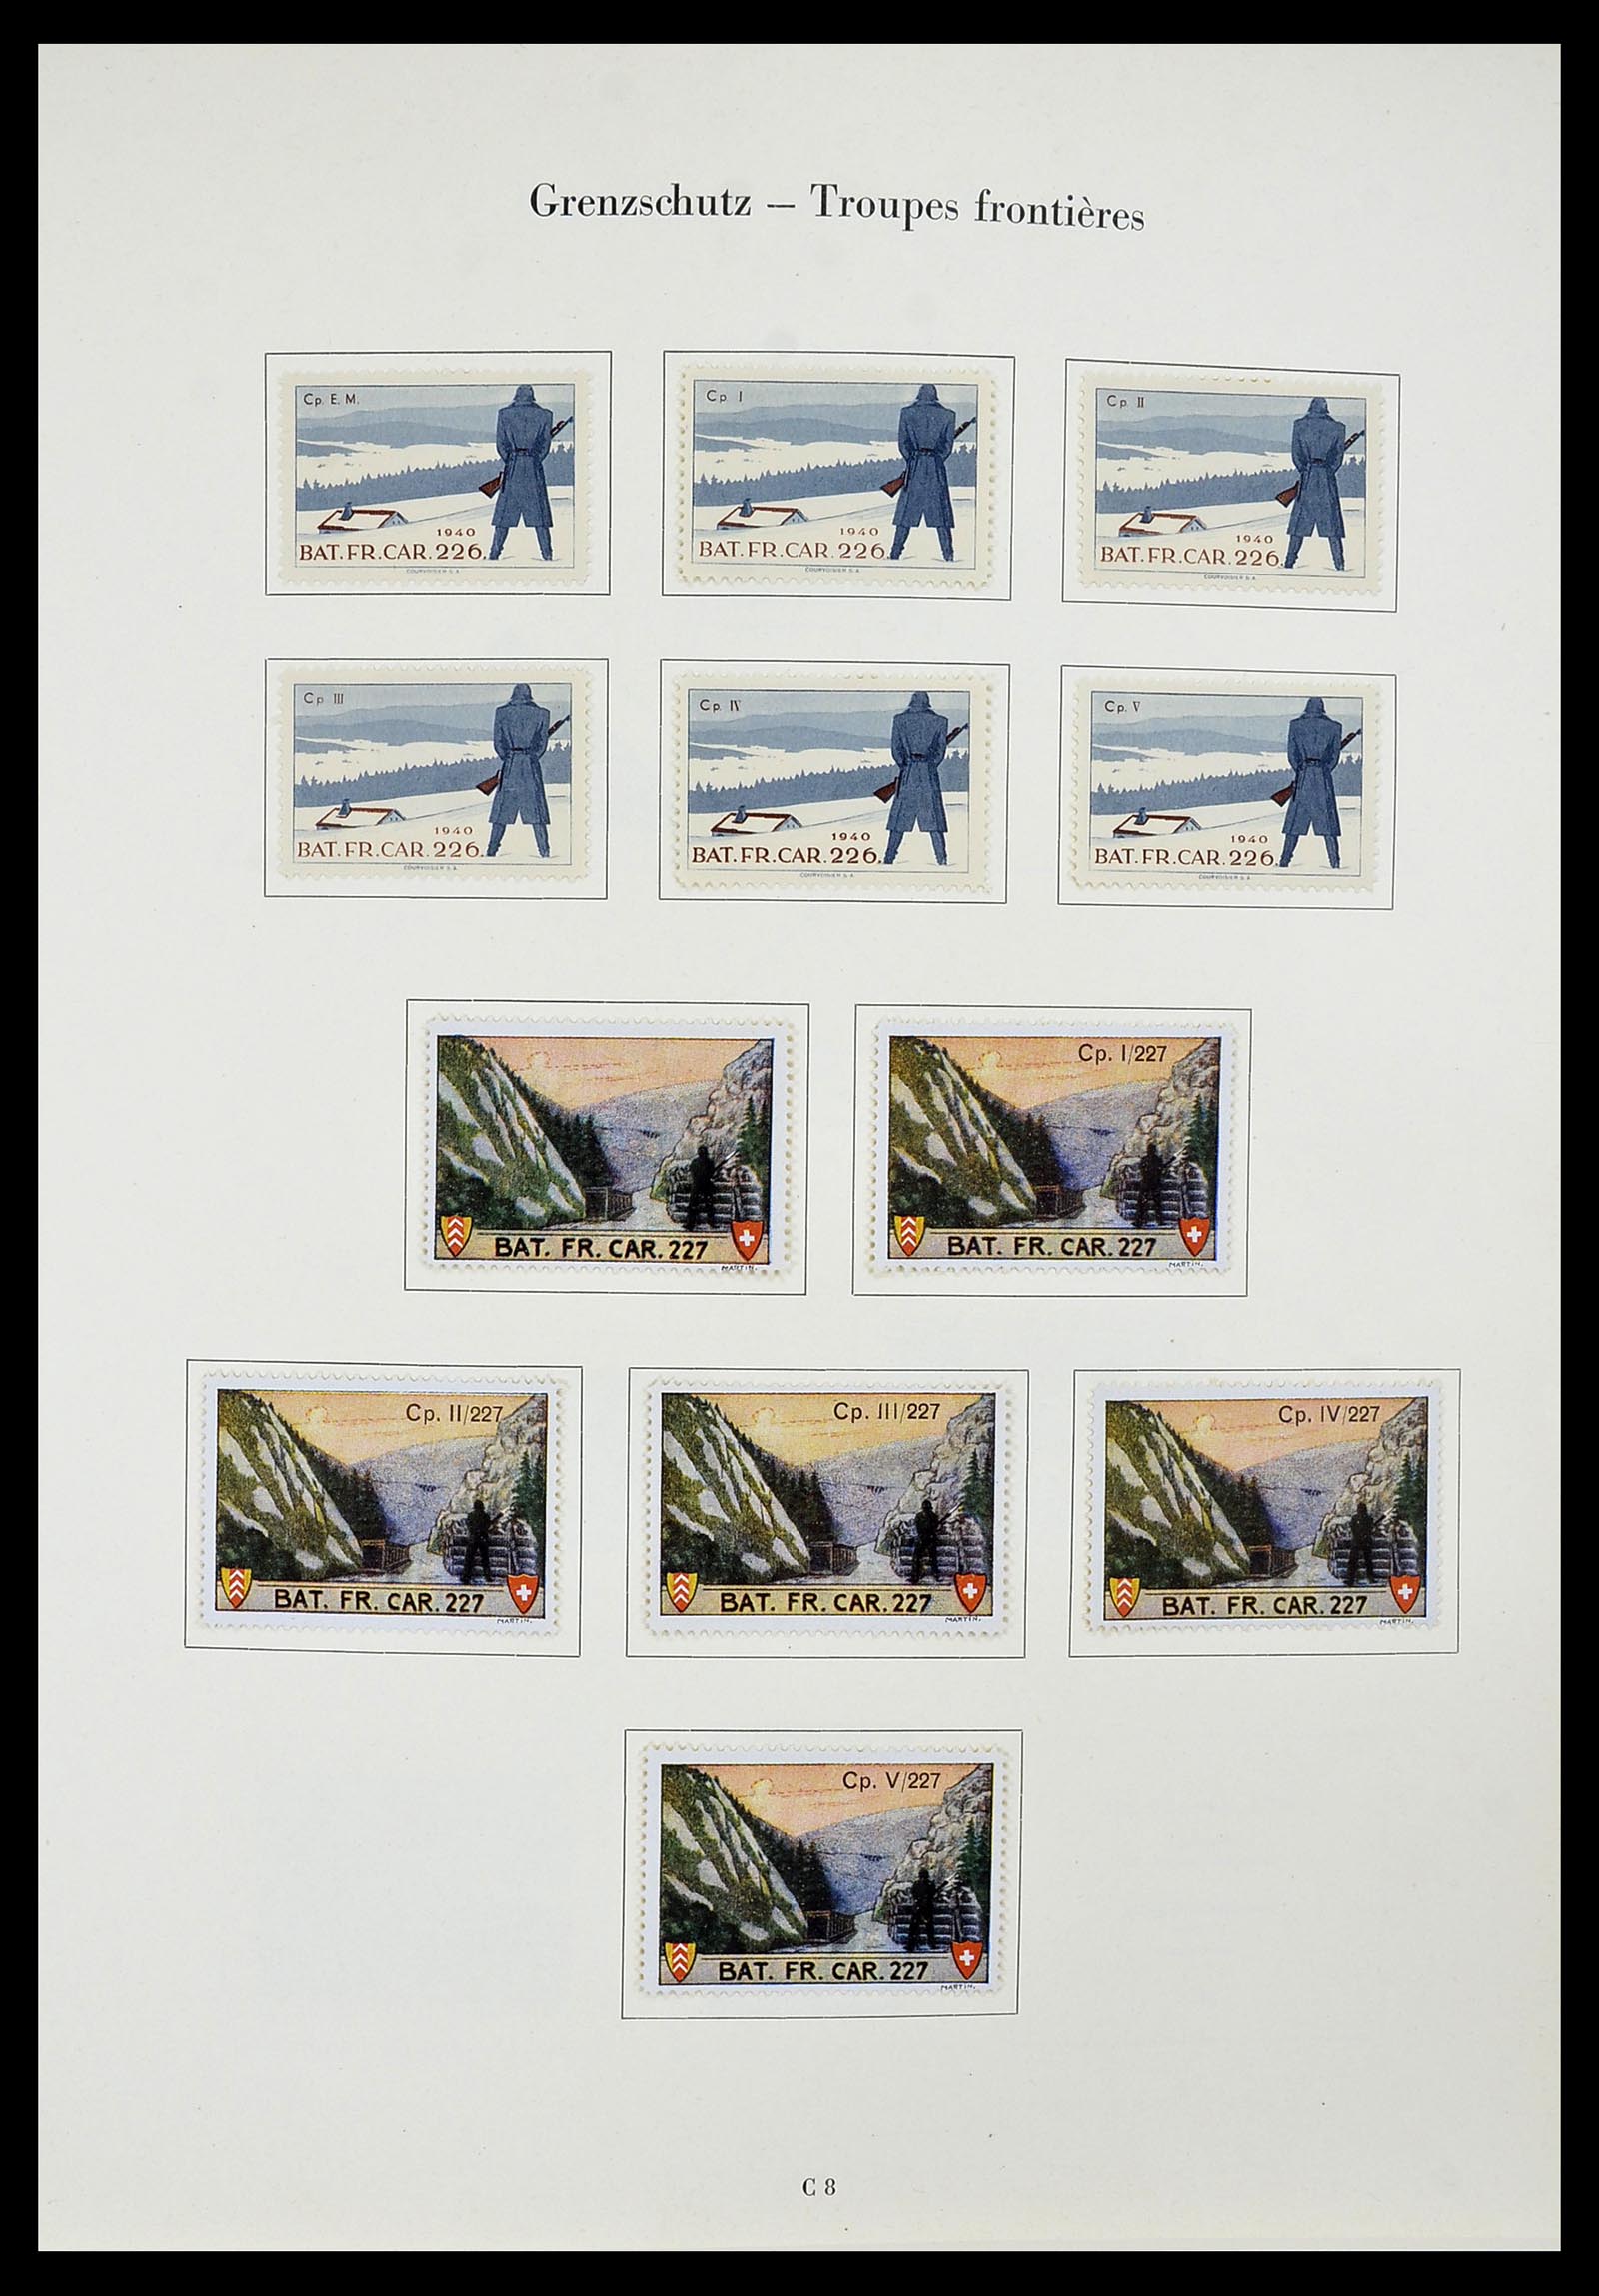 34234 093 - Stamp collection 34234 Switzerland soldier stamps 1939-1945.